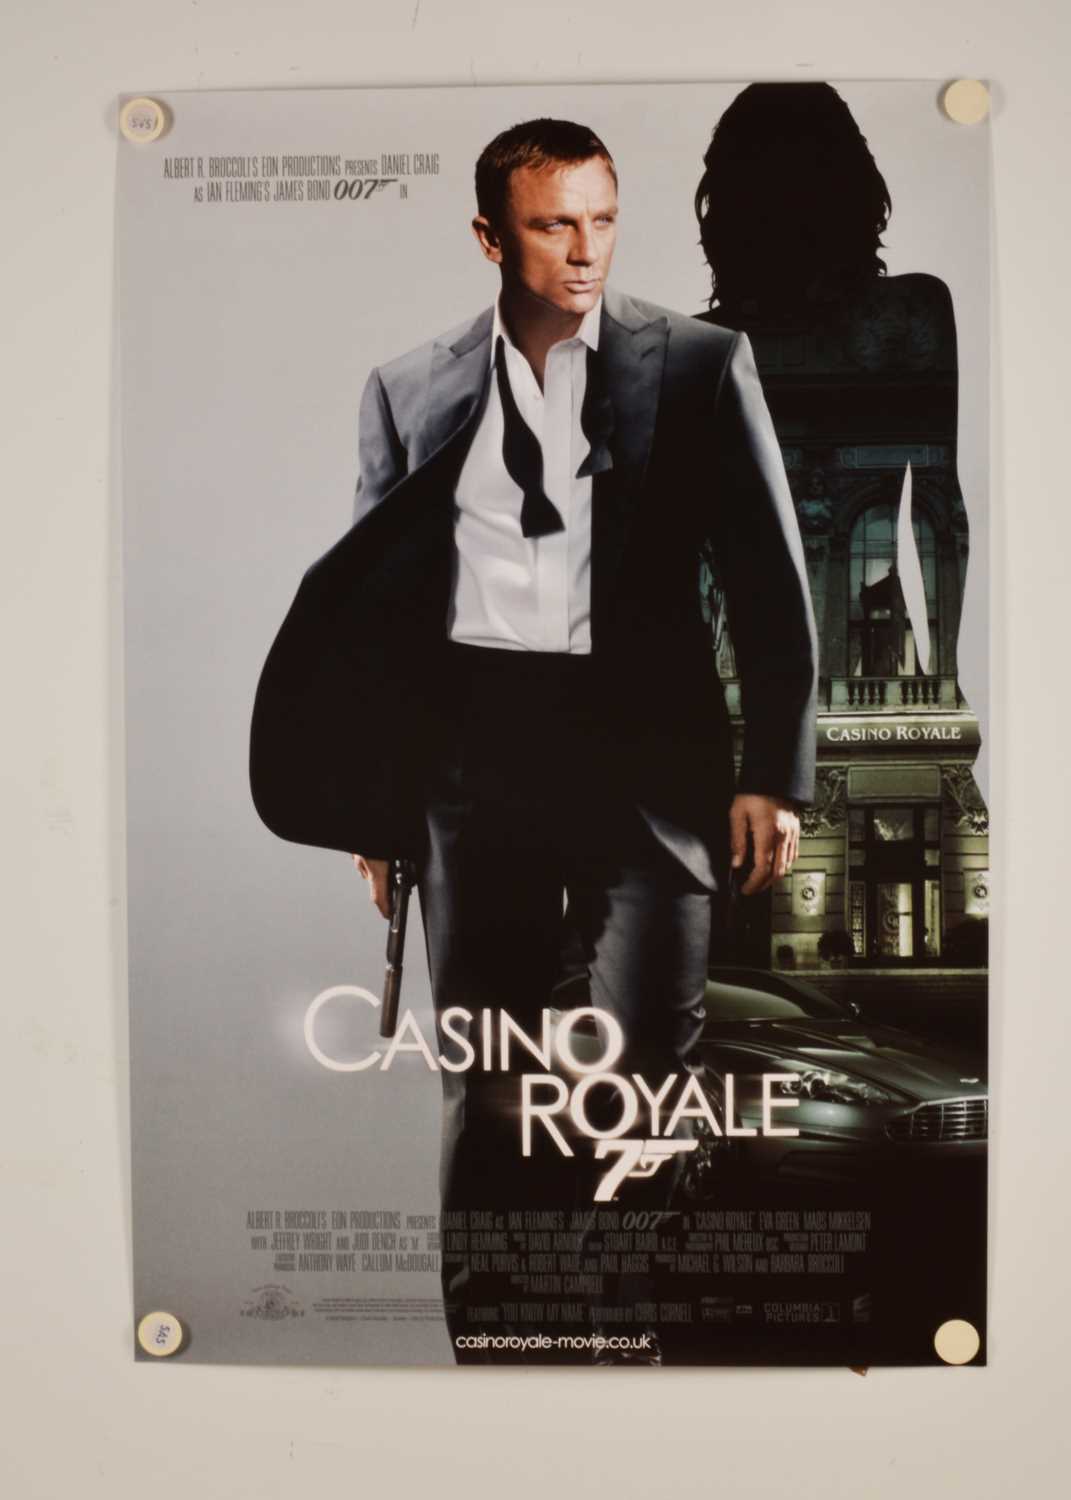 James Bond Film Posters, - Image 3 of 3